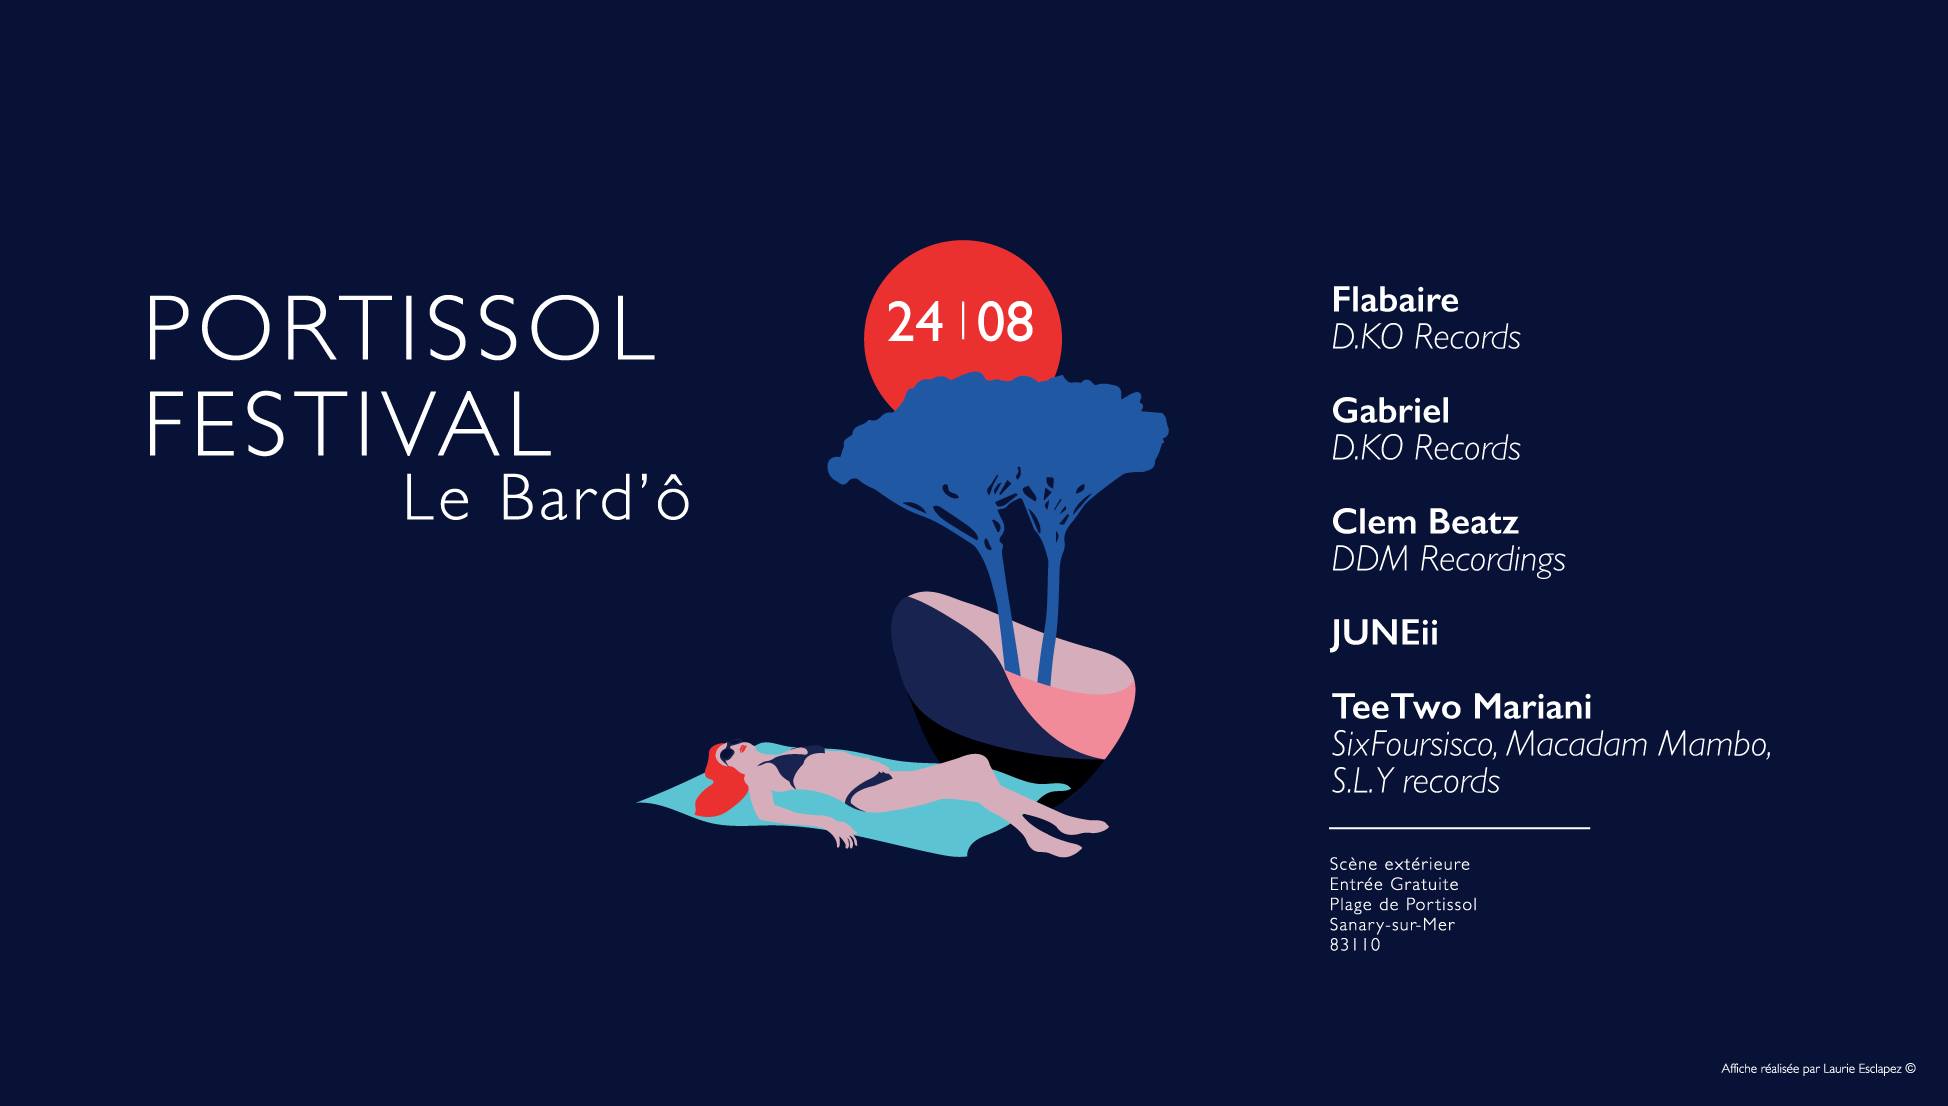 Portissol Festival 2017